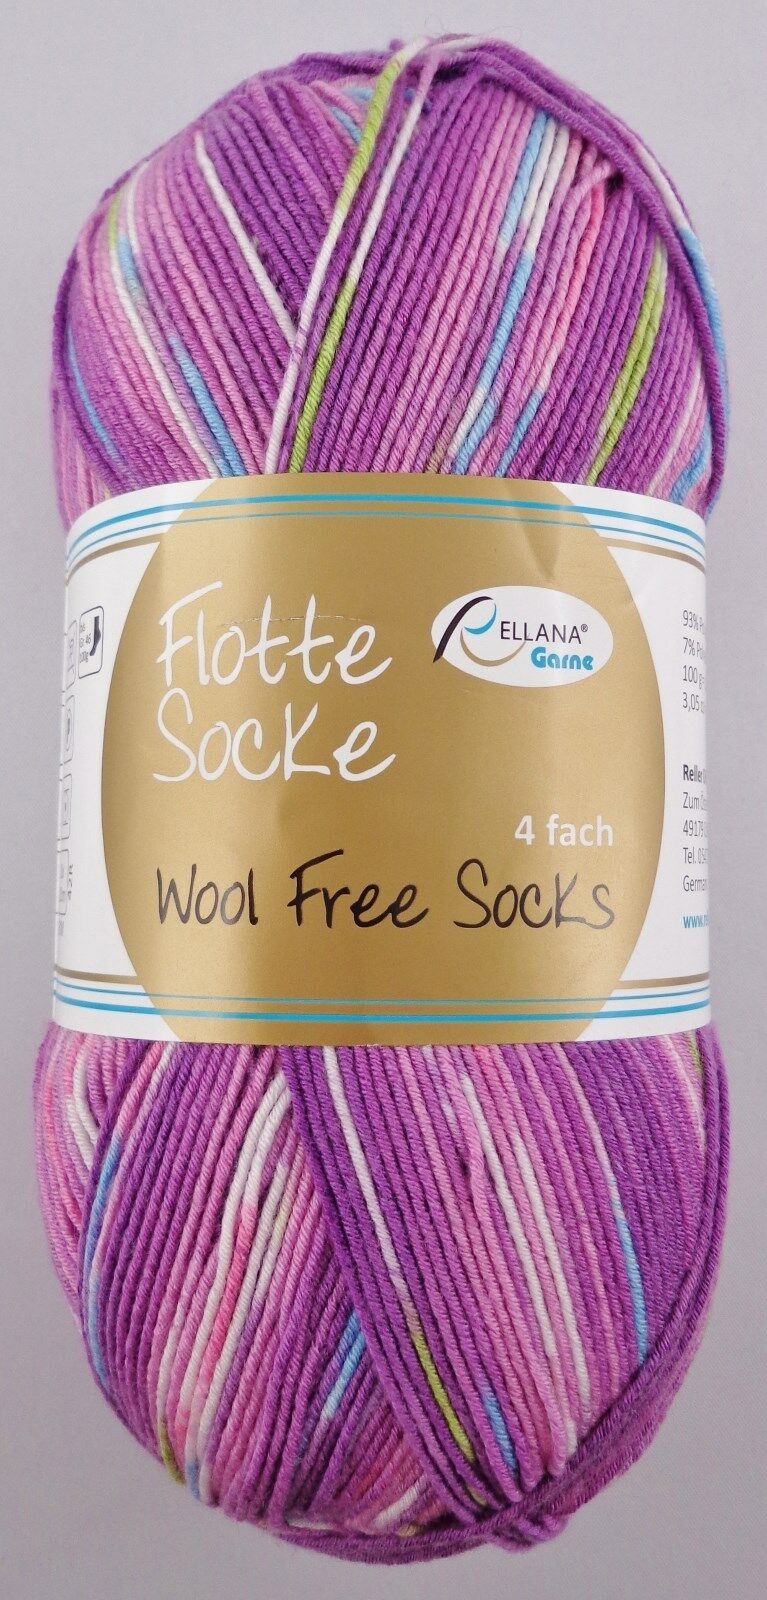 Flotte Sock Wool Free Stretch, Clearance